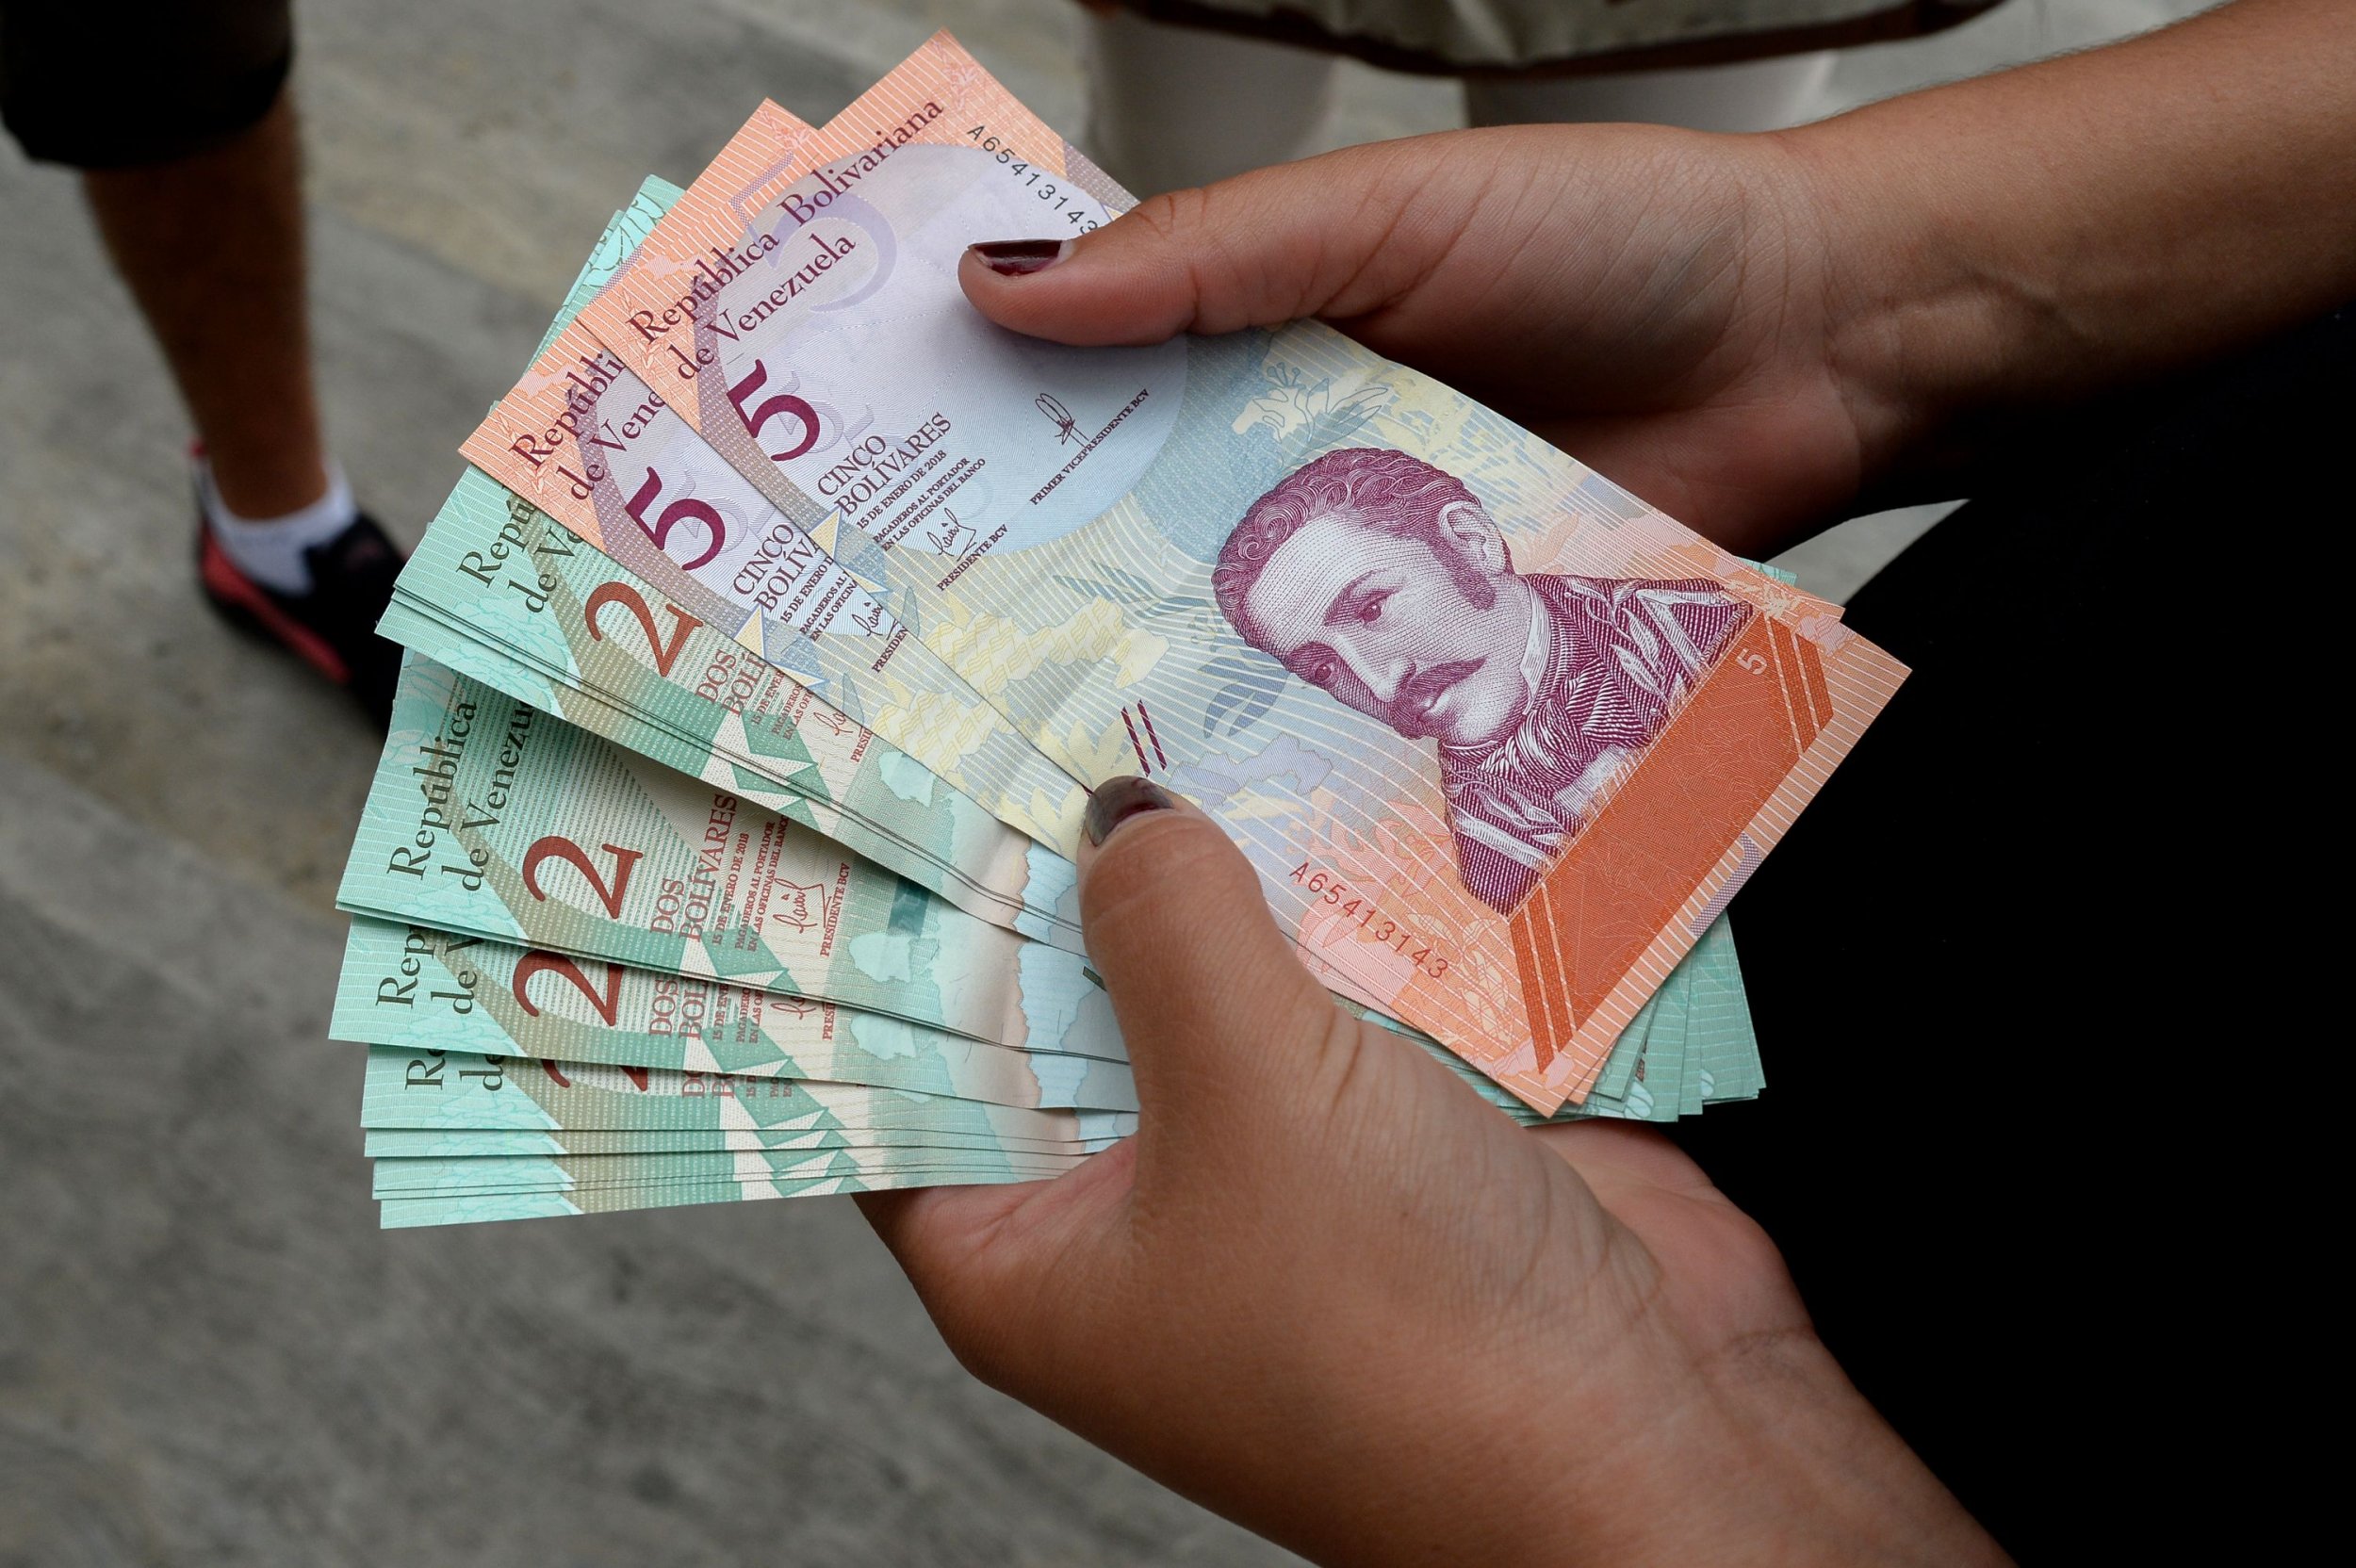 The monetary reform of October 1 turned 100 billion bolivars into 1 new bolivar. (Photo internet reproduction)